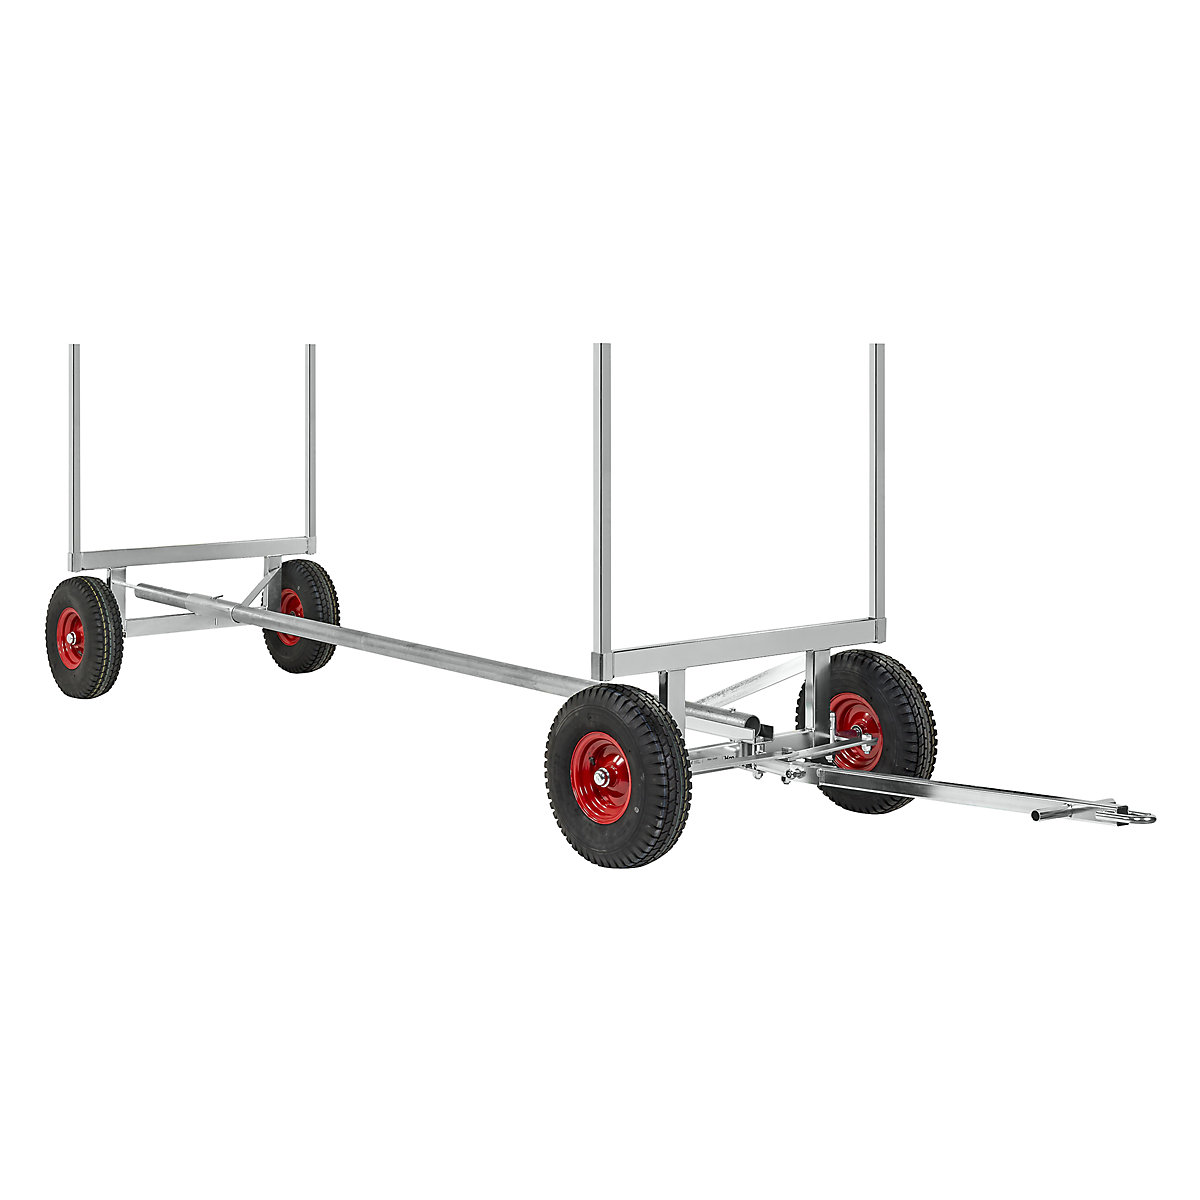 Kongamek – Carro profesional para objetos largos, carga máx. 3,5 t, longitud 4 m, galvanizado electrolíticamente